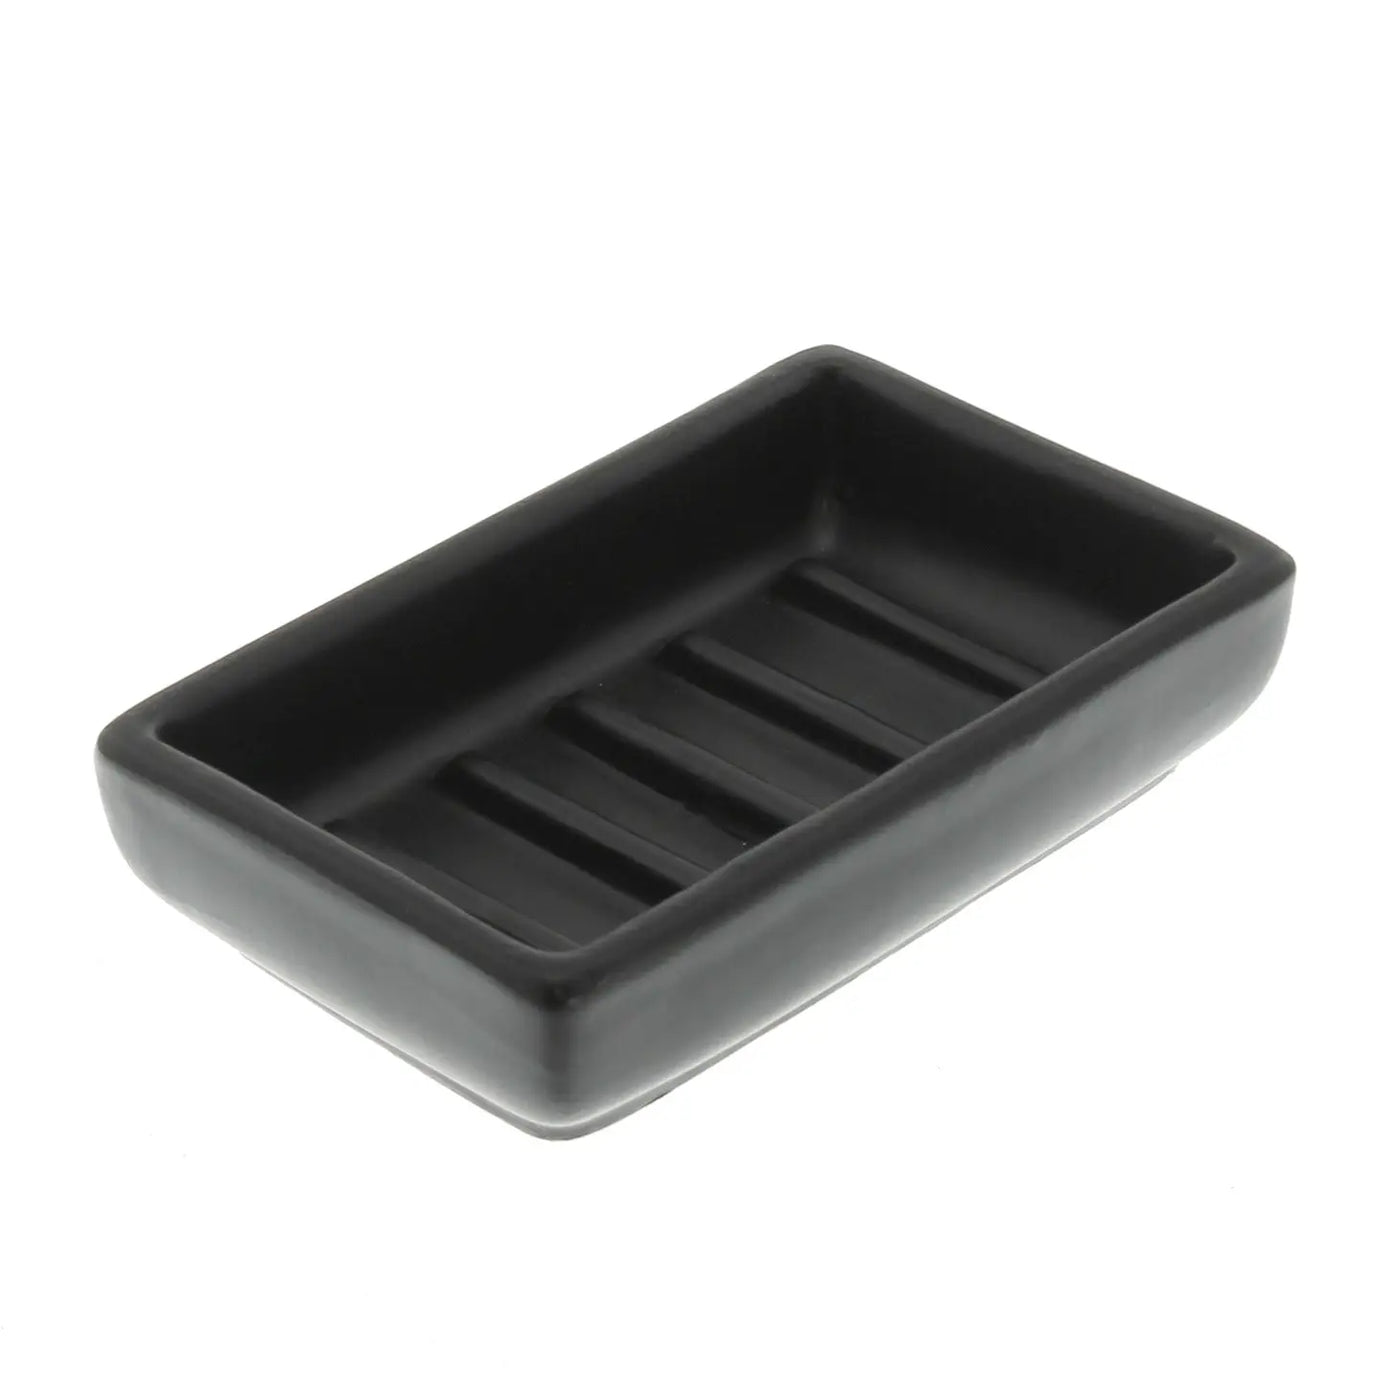 black matte rectangular soap dish with ridges on the bottom.